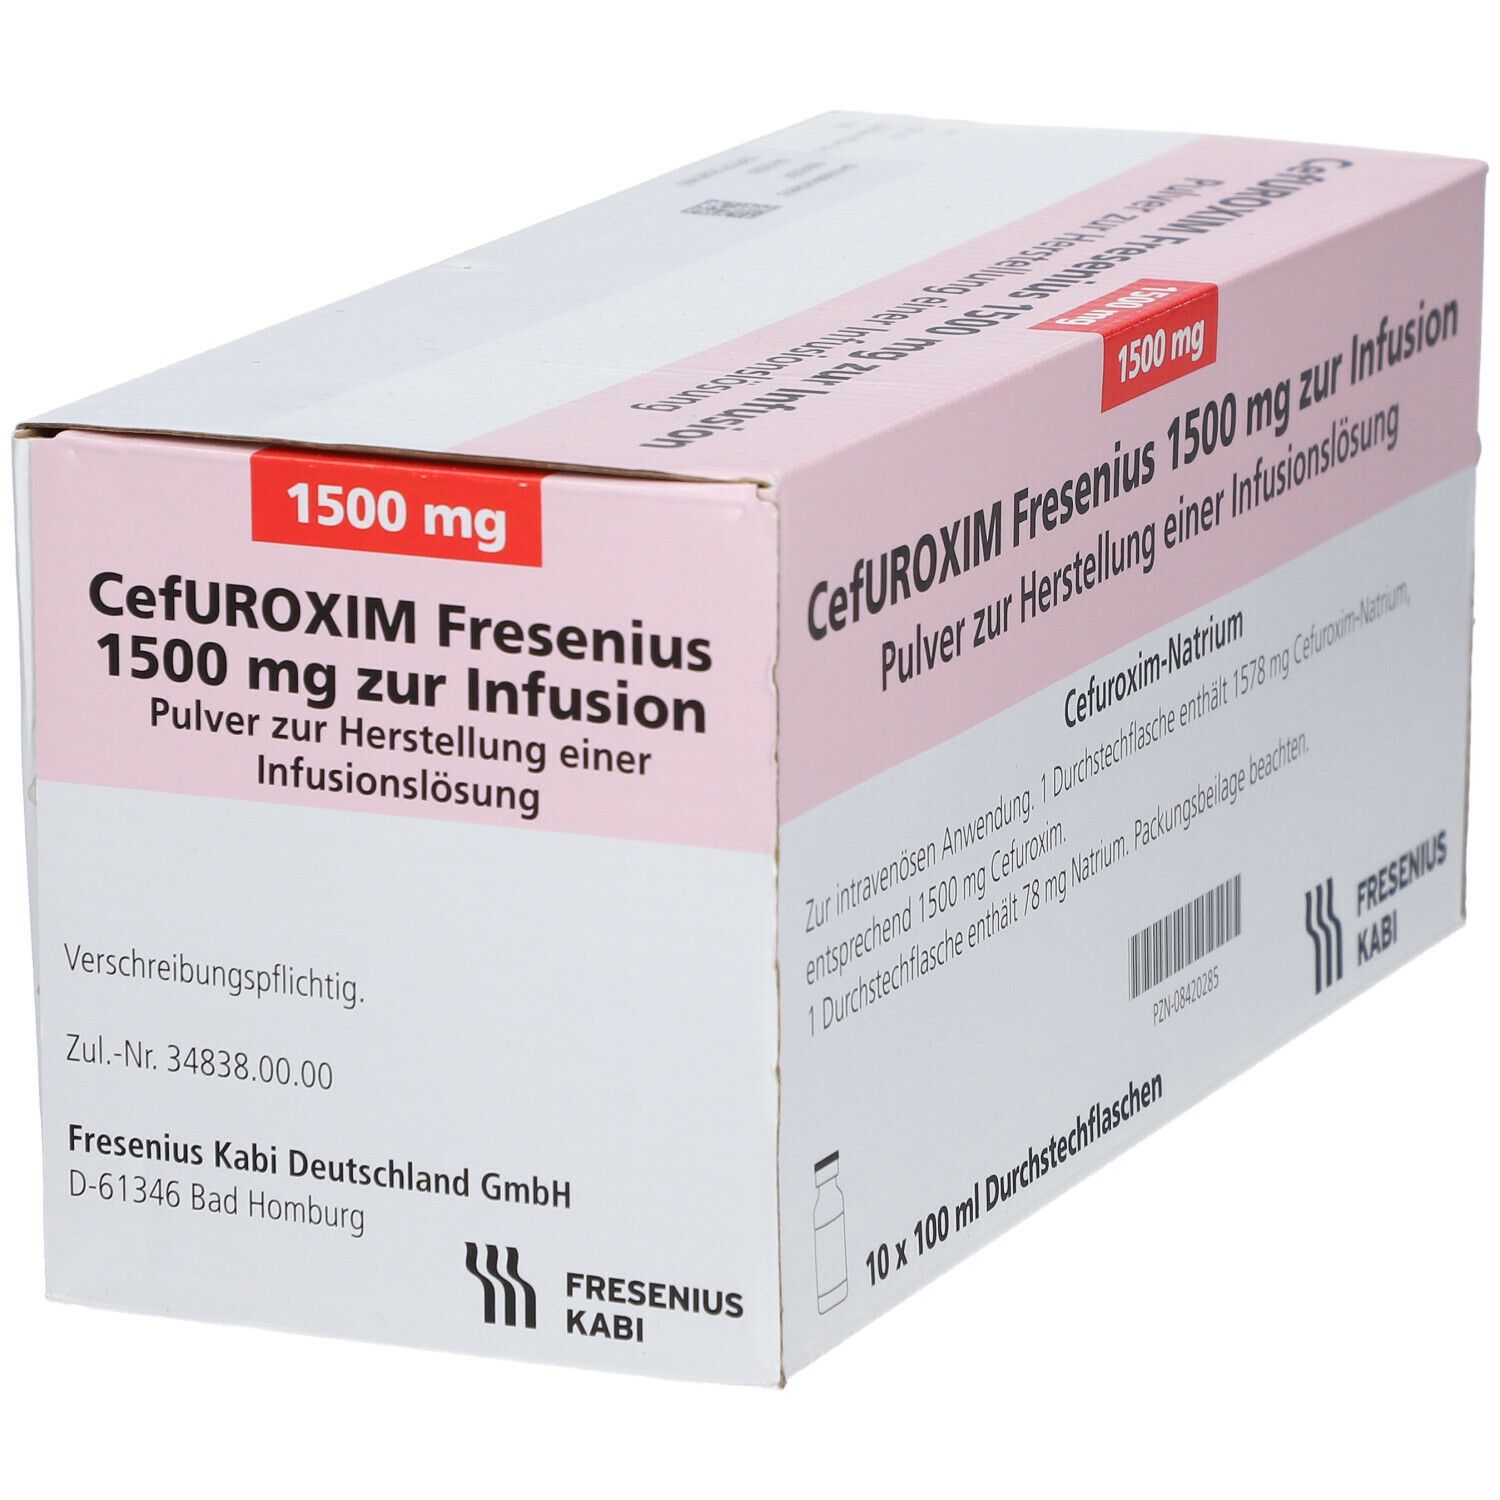 CefUROXIM Fresenius 1500 mg